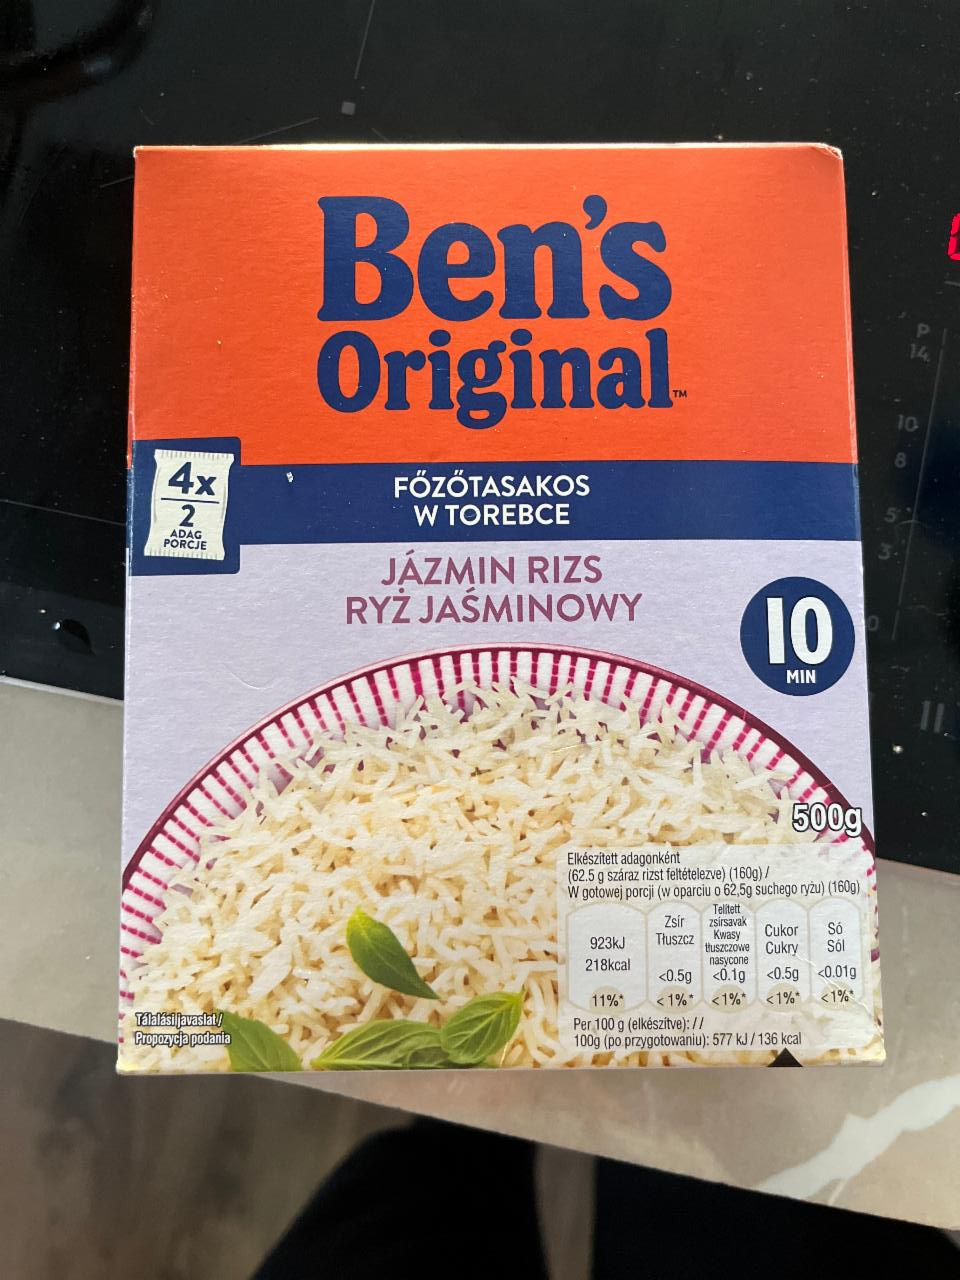 Képek - Főzőtasakos jázmin rizs Ben’s Original